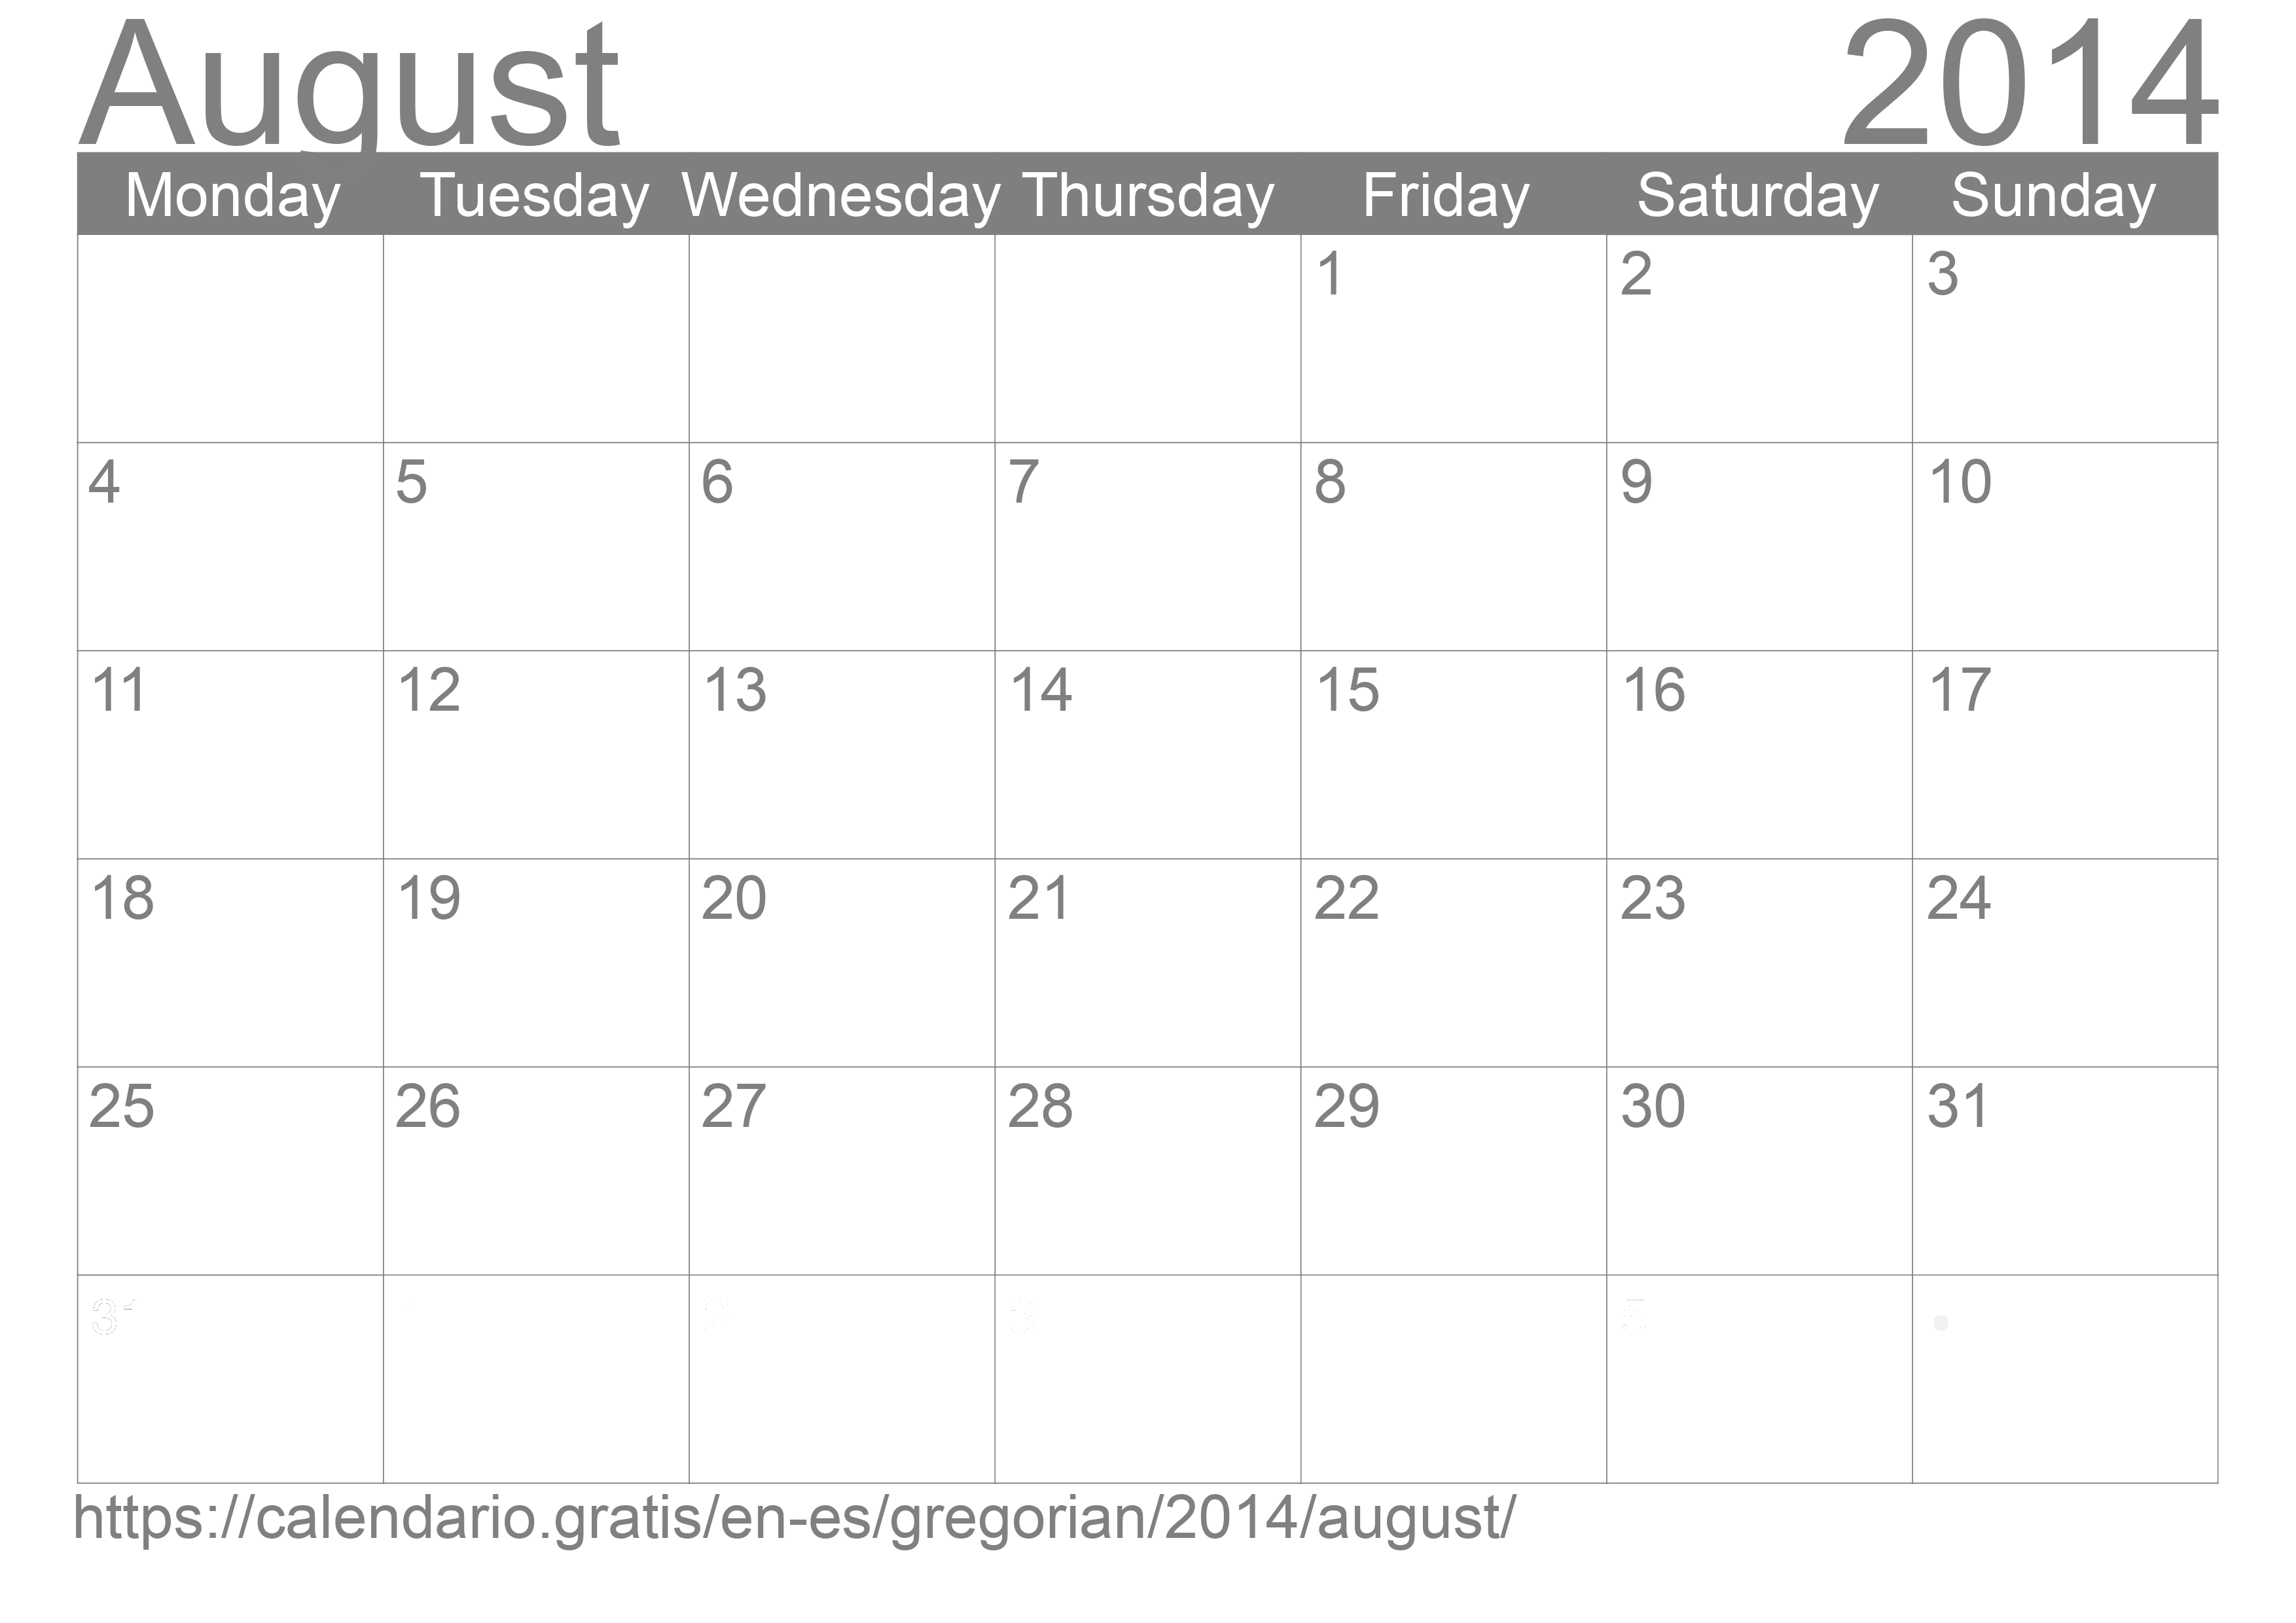 Calendar August 2014 to print